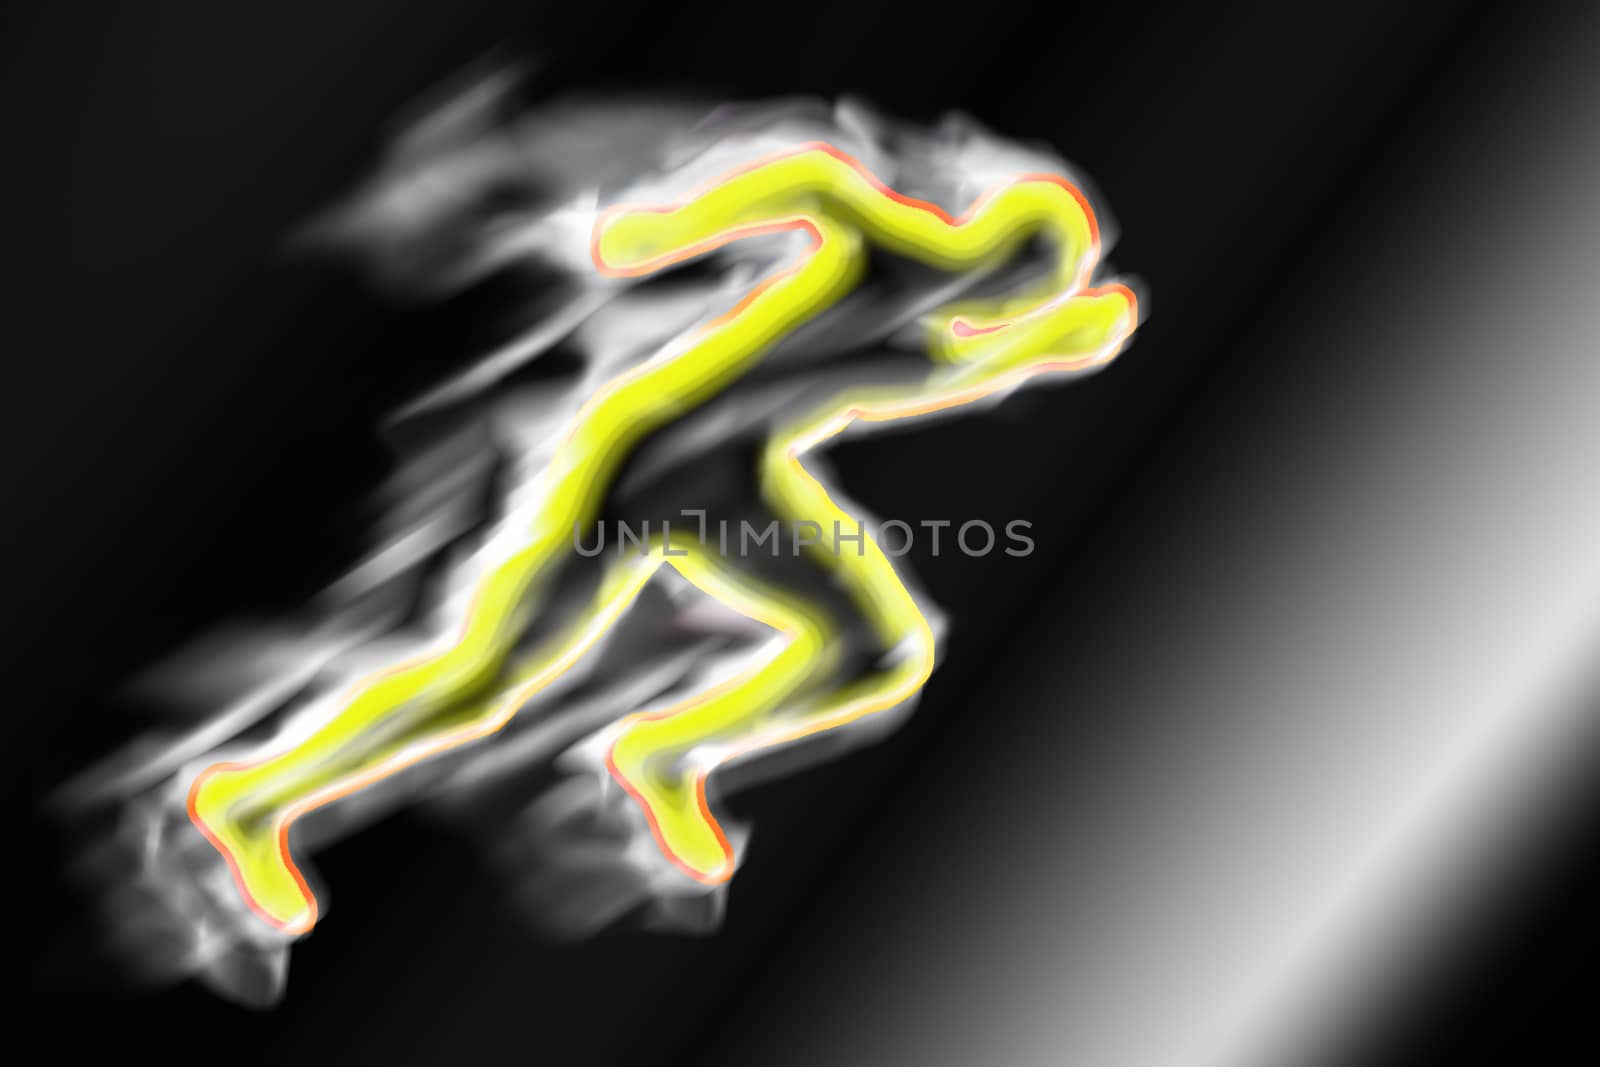 Illustration depicting an athlete taking off enveloped in smoke